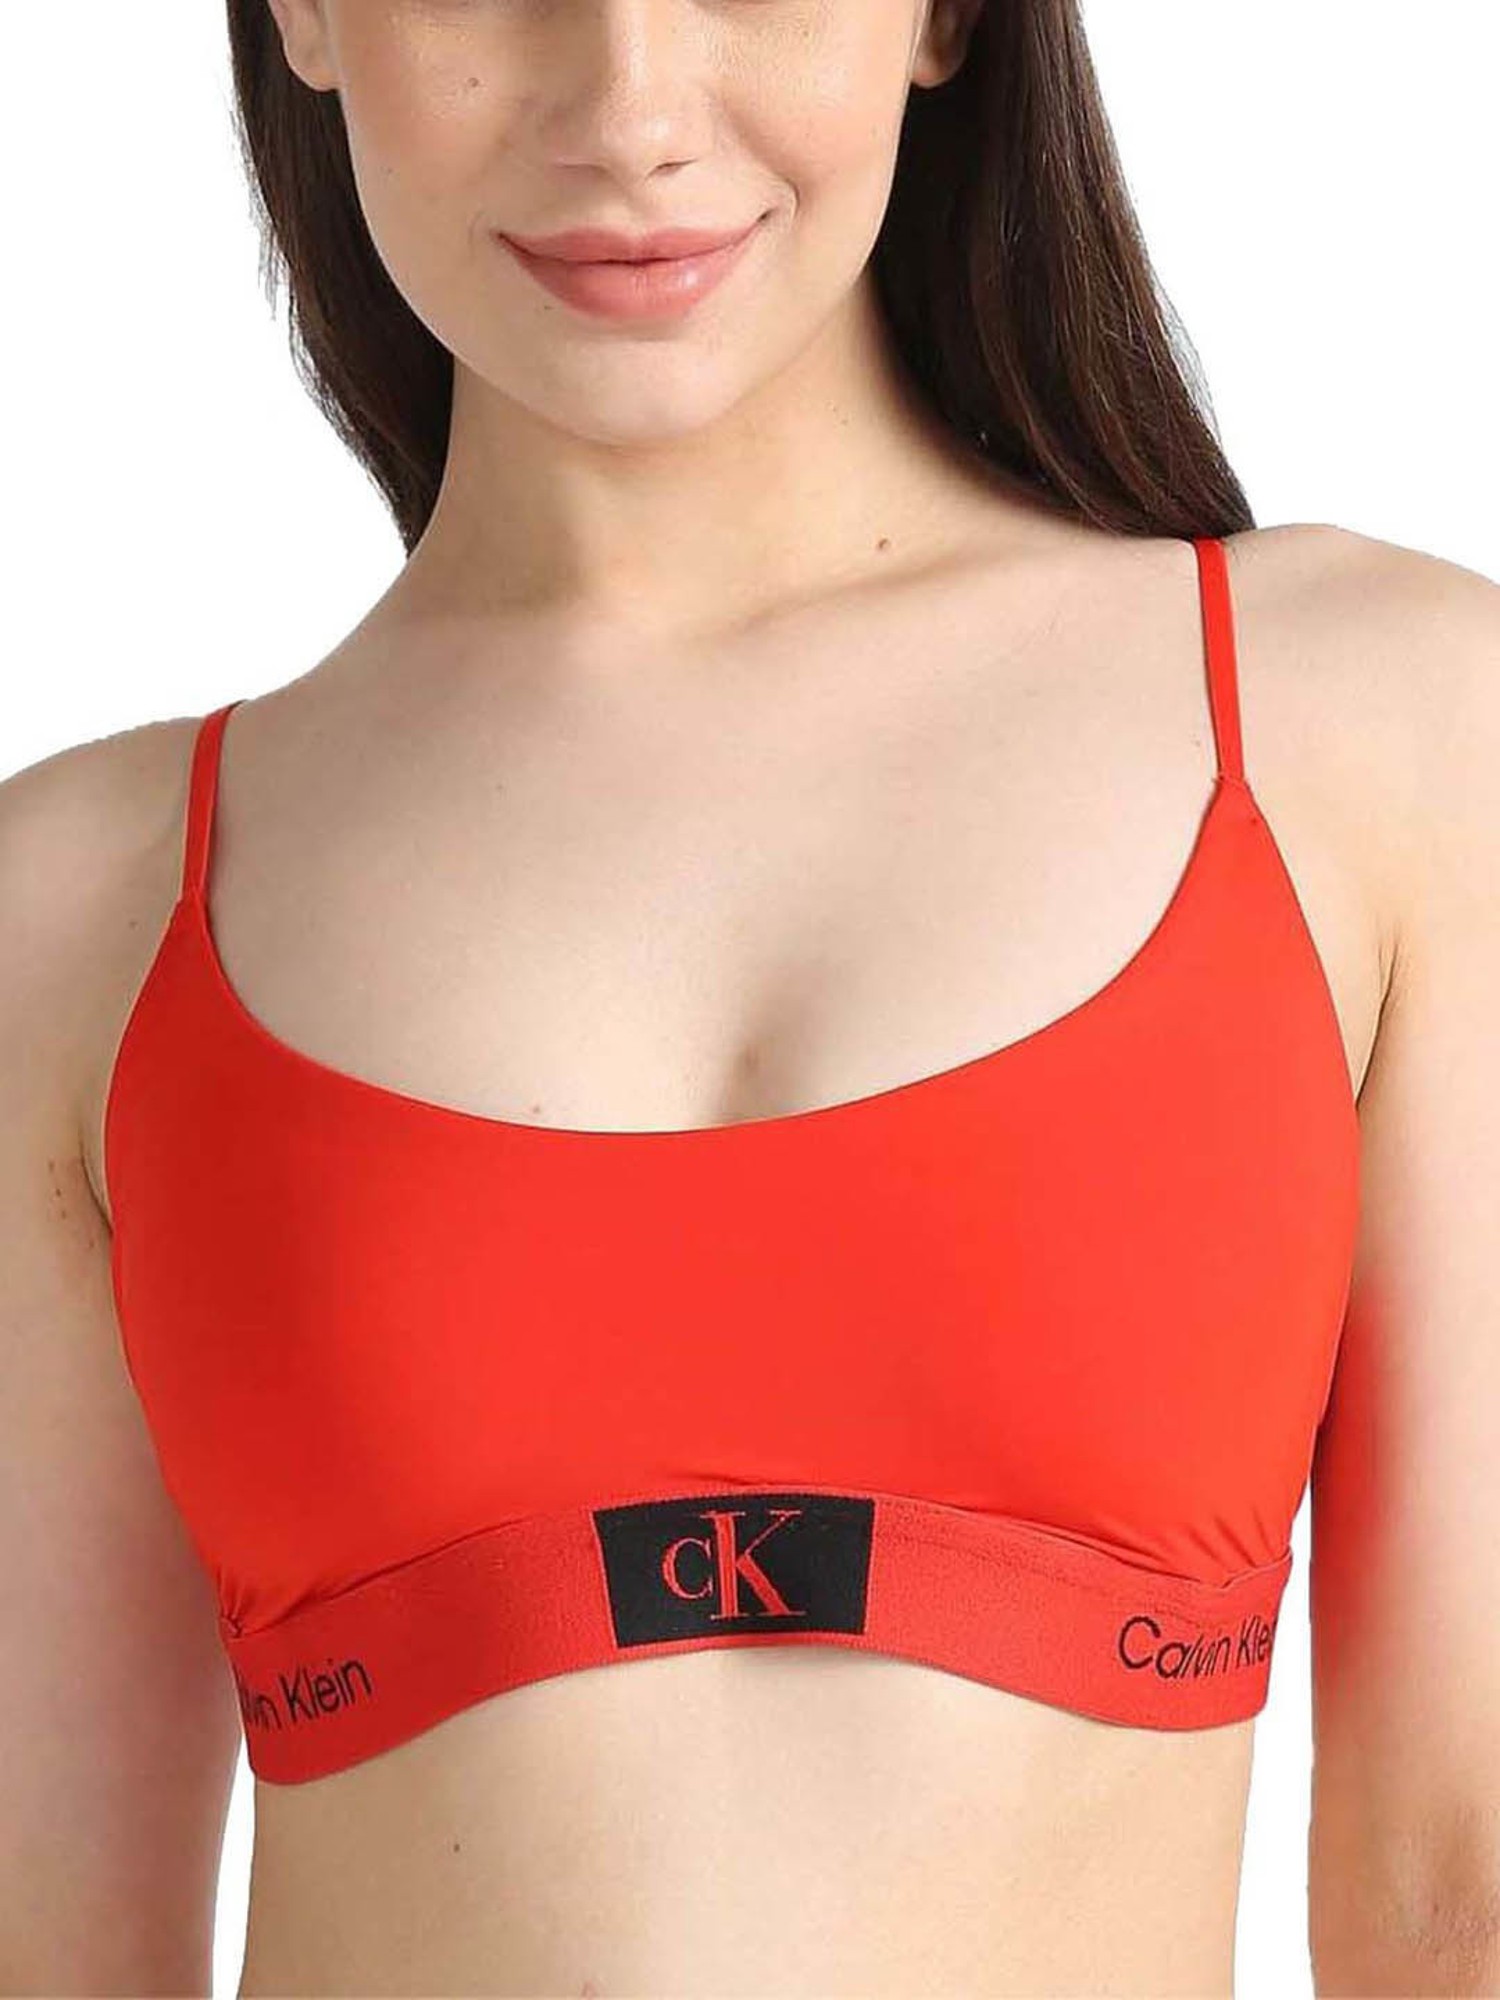 Calvin Klein F3827 Red Perfectly Fit Moderen T-Shirt Underwire Bra 34A💖 